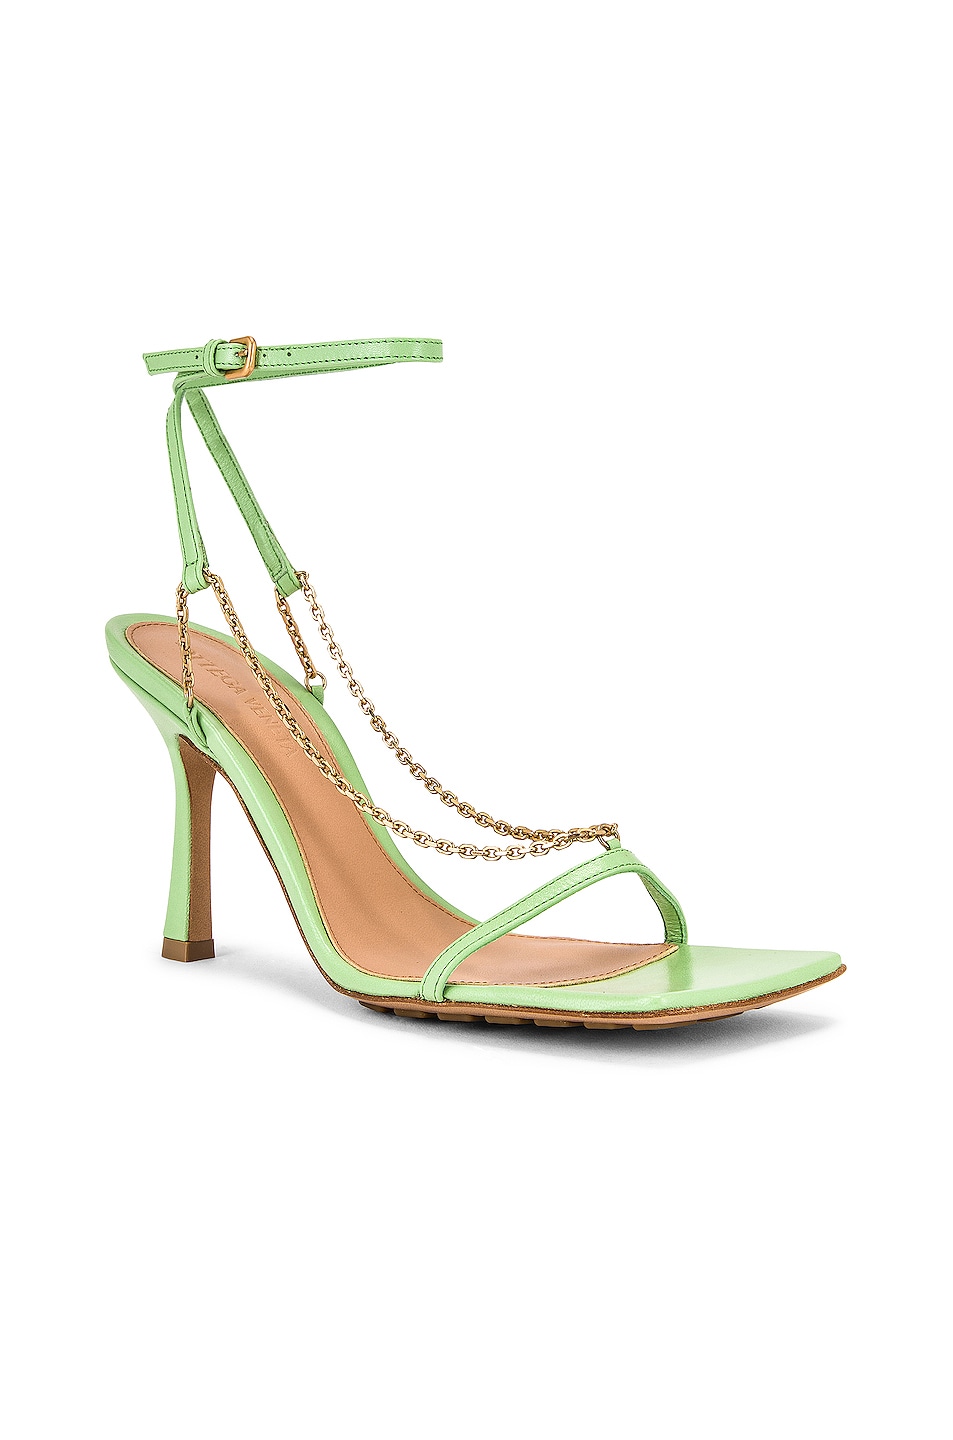 Bottega Veneta Stretch Chain Sandals in Pistachio | FWRD